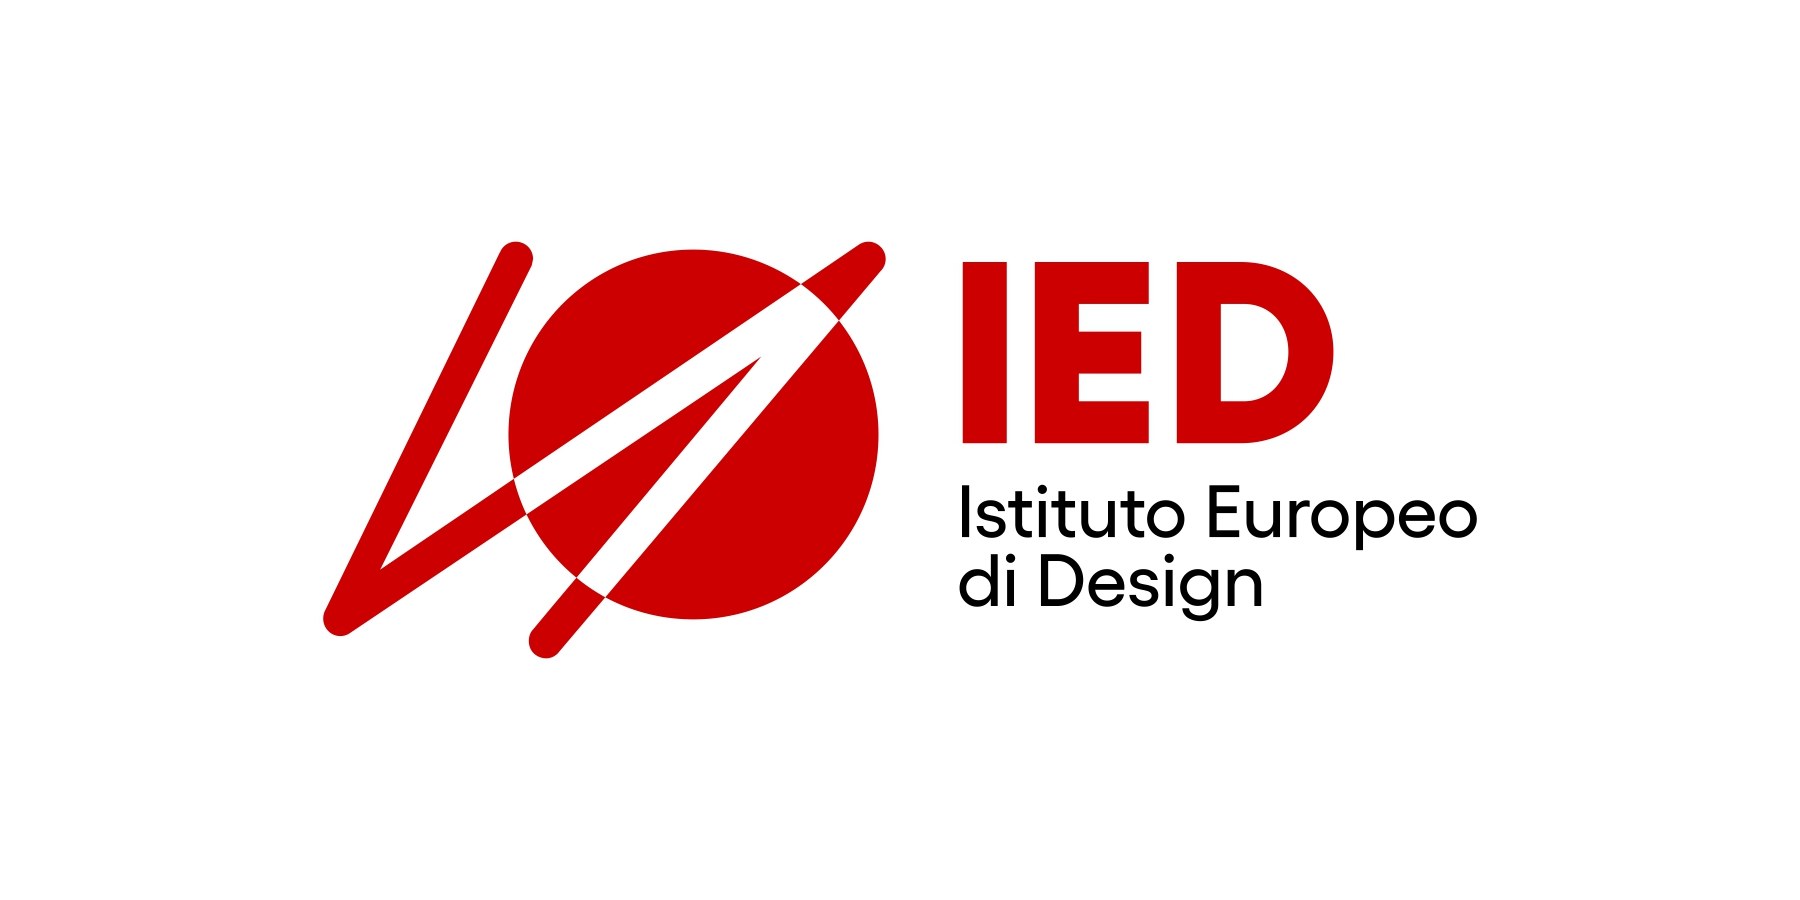  Instituto Europeo di Design - Rio de Janeiro